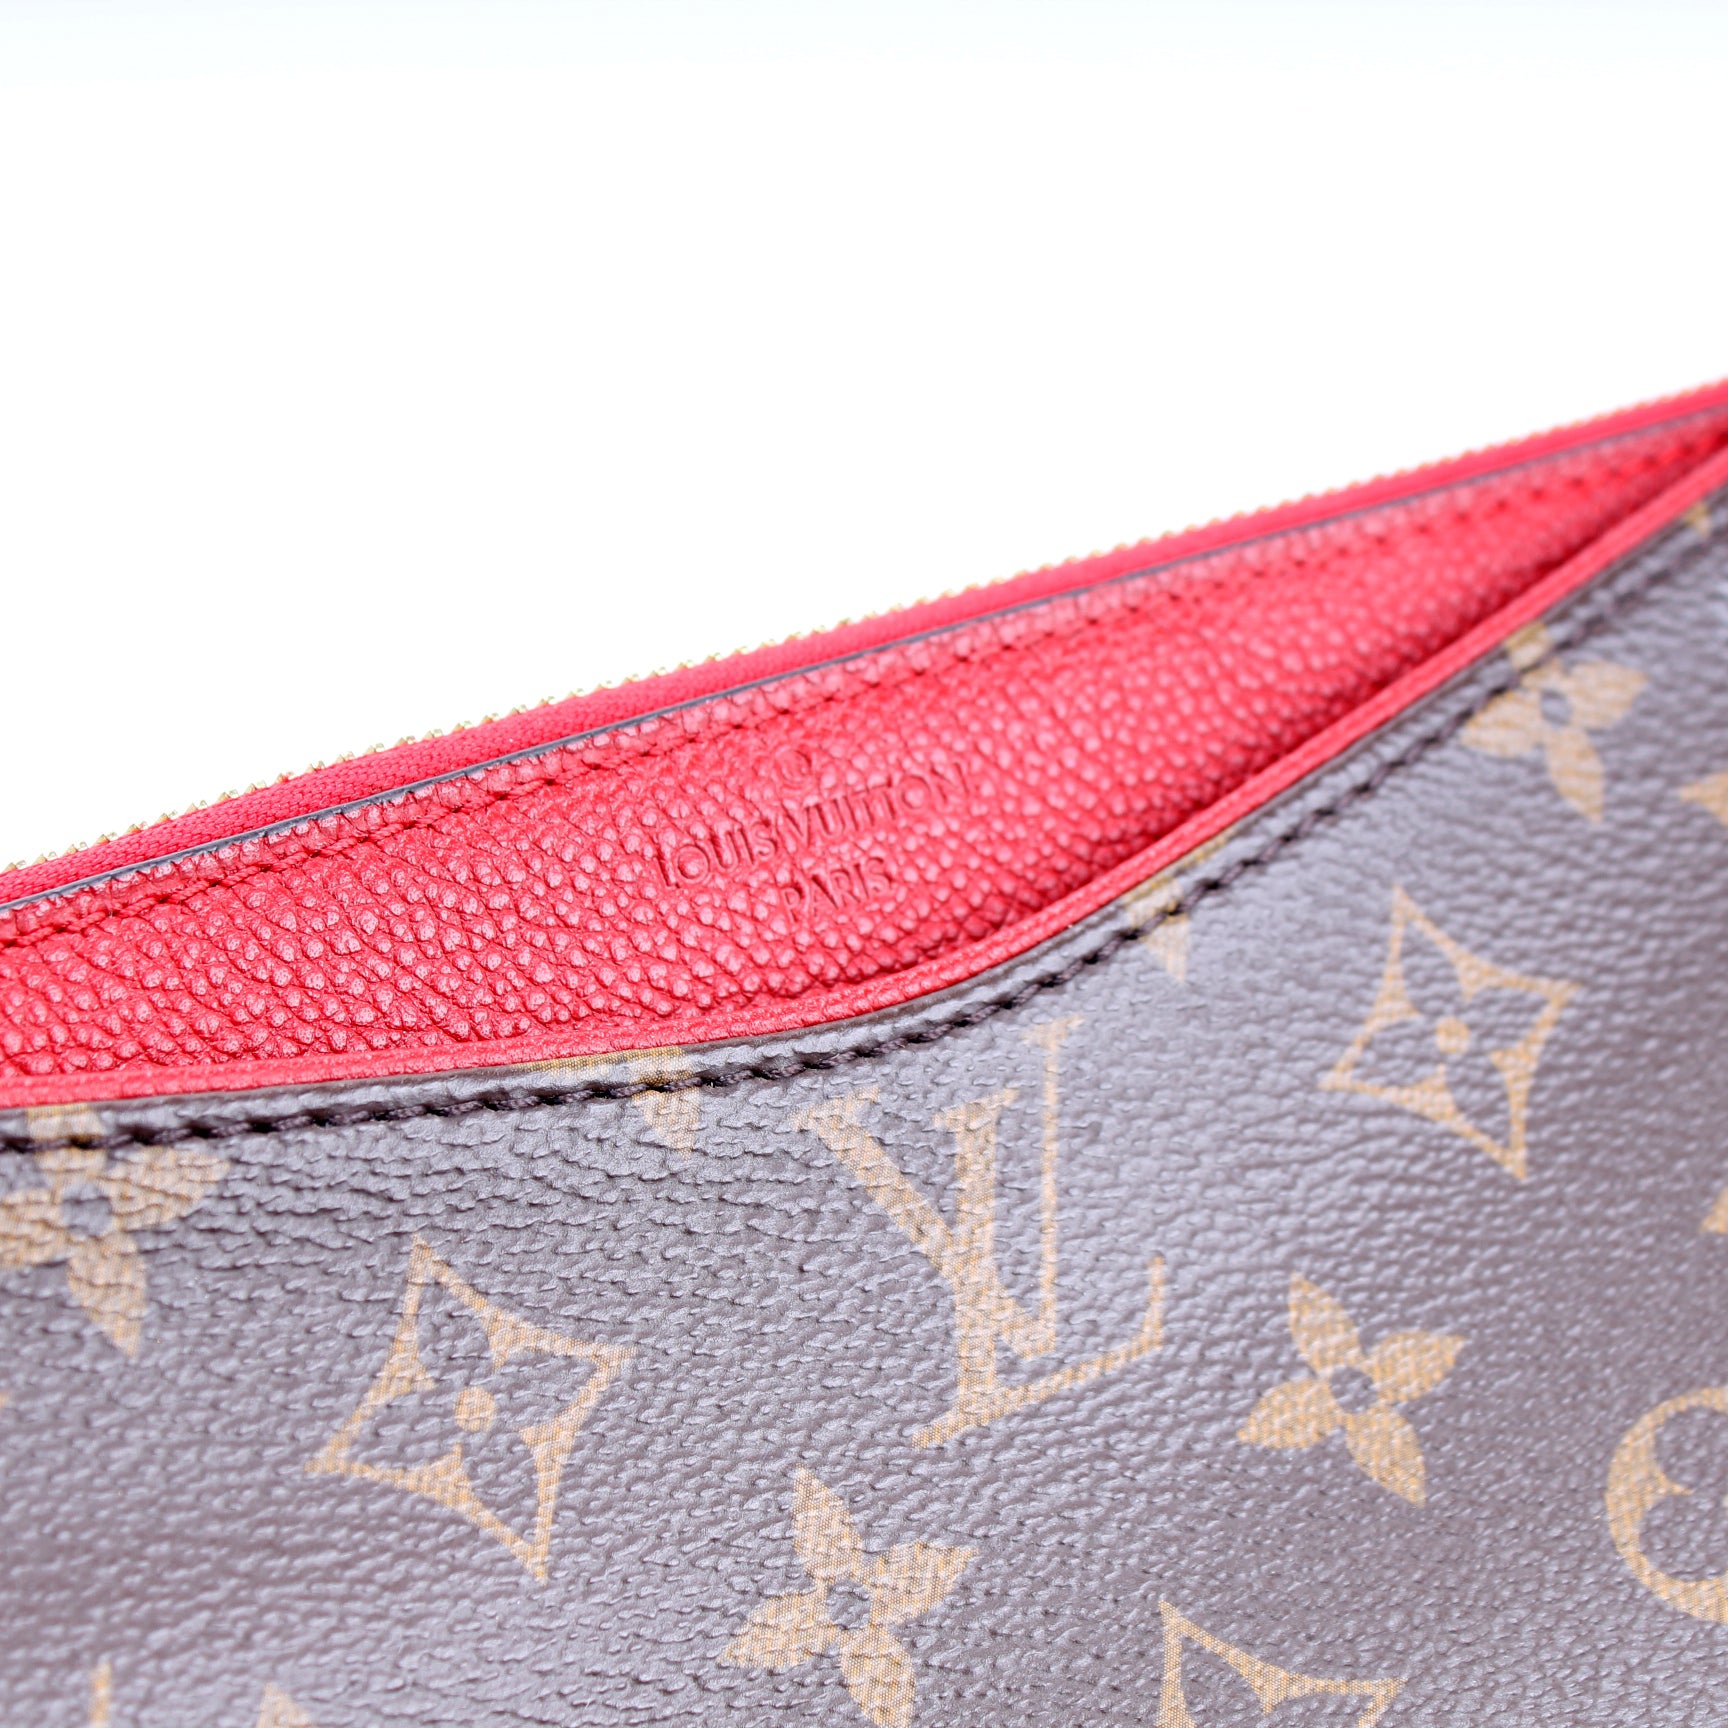 Pallas Beauty Case Monogram – Keeks Designer Handbags